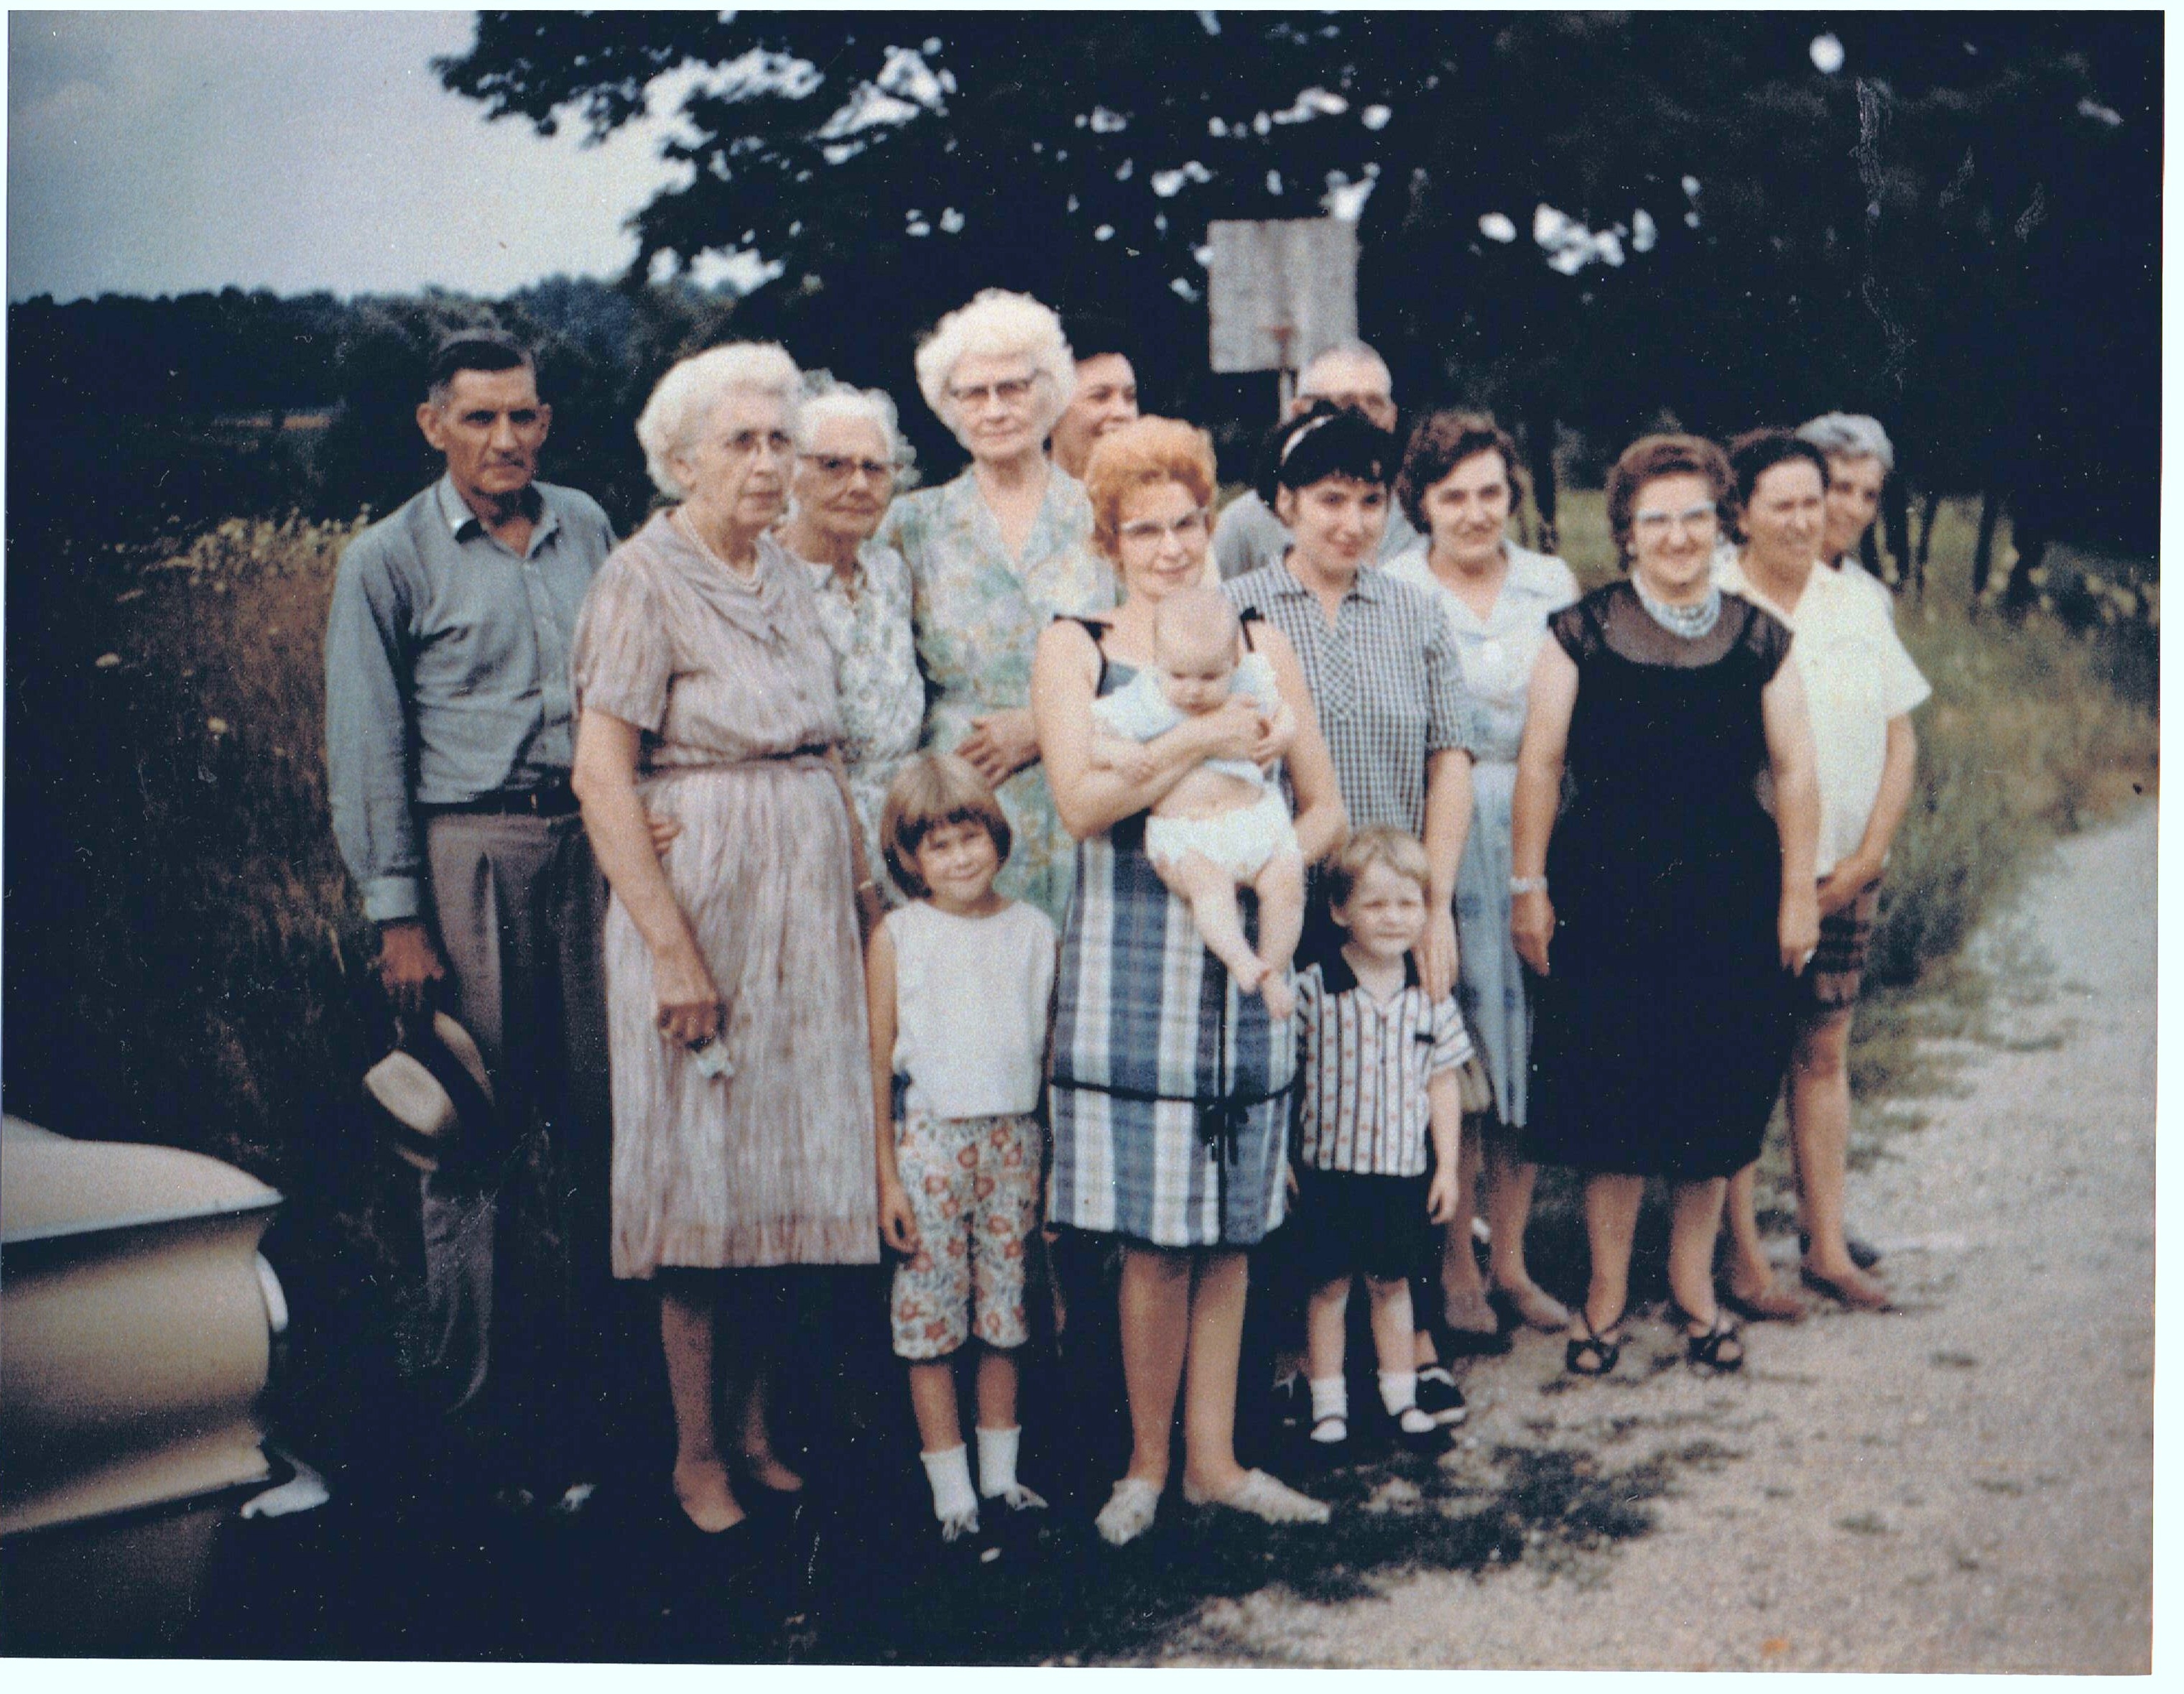 Walker Famiily Reunion. Indiana